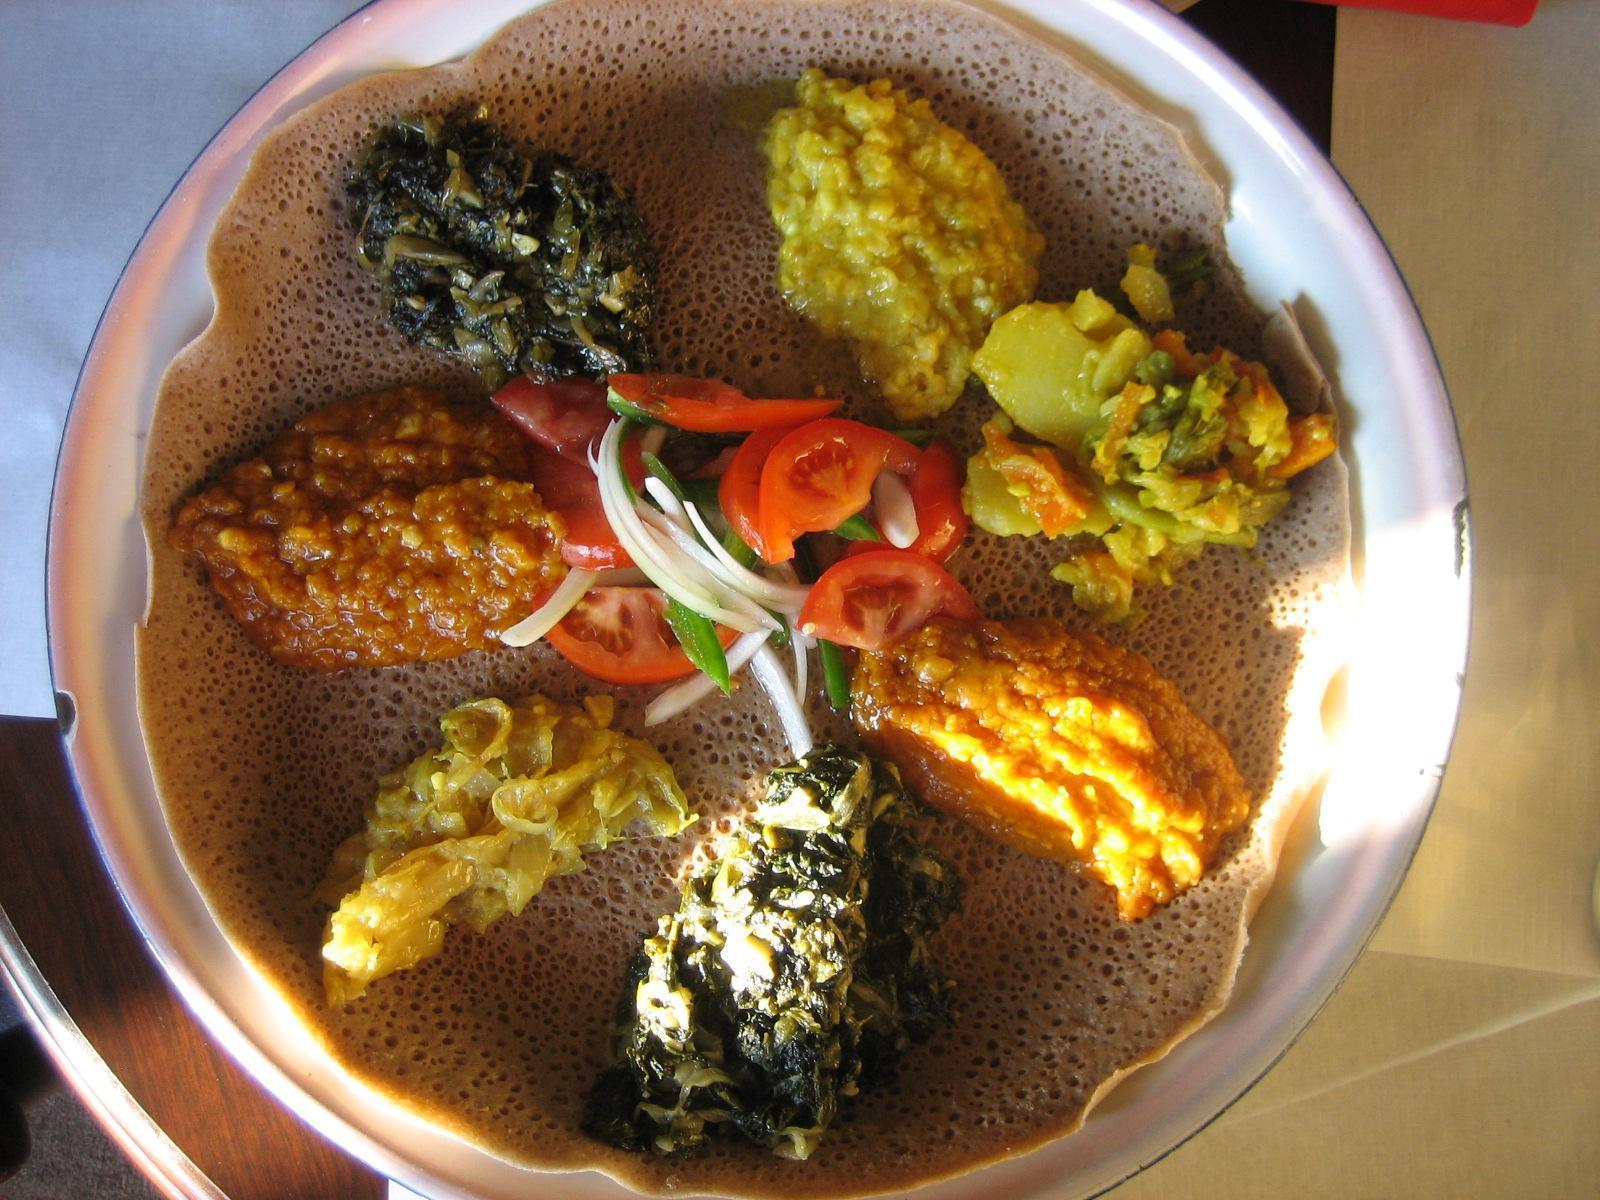 Abyssinianfood